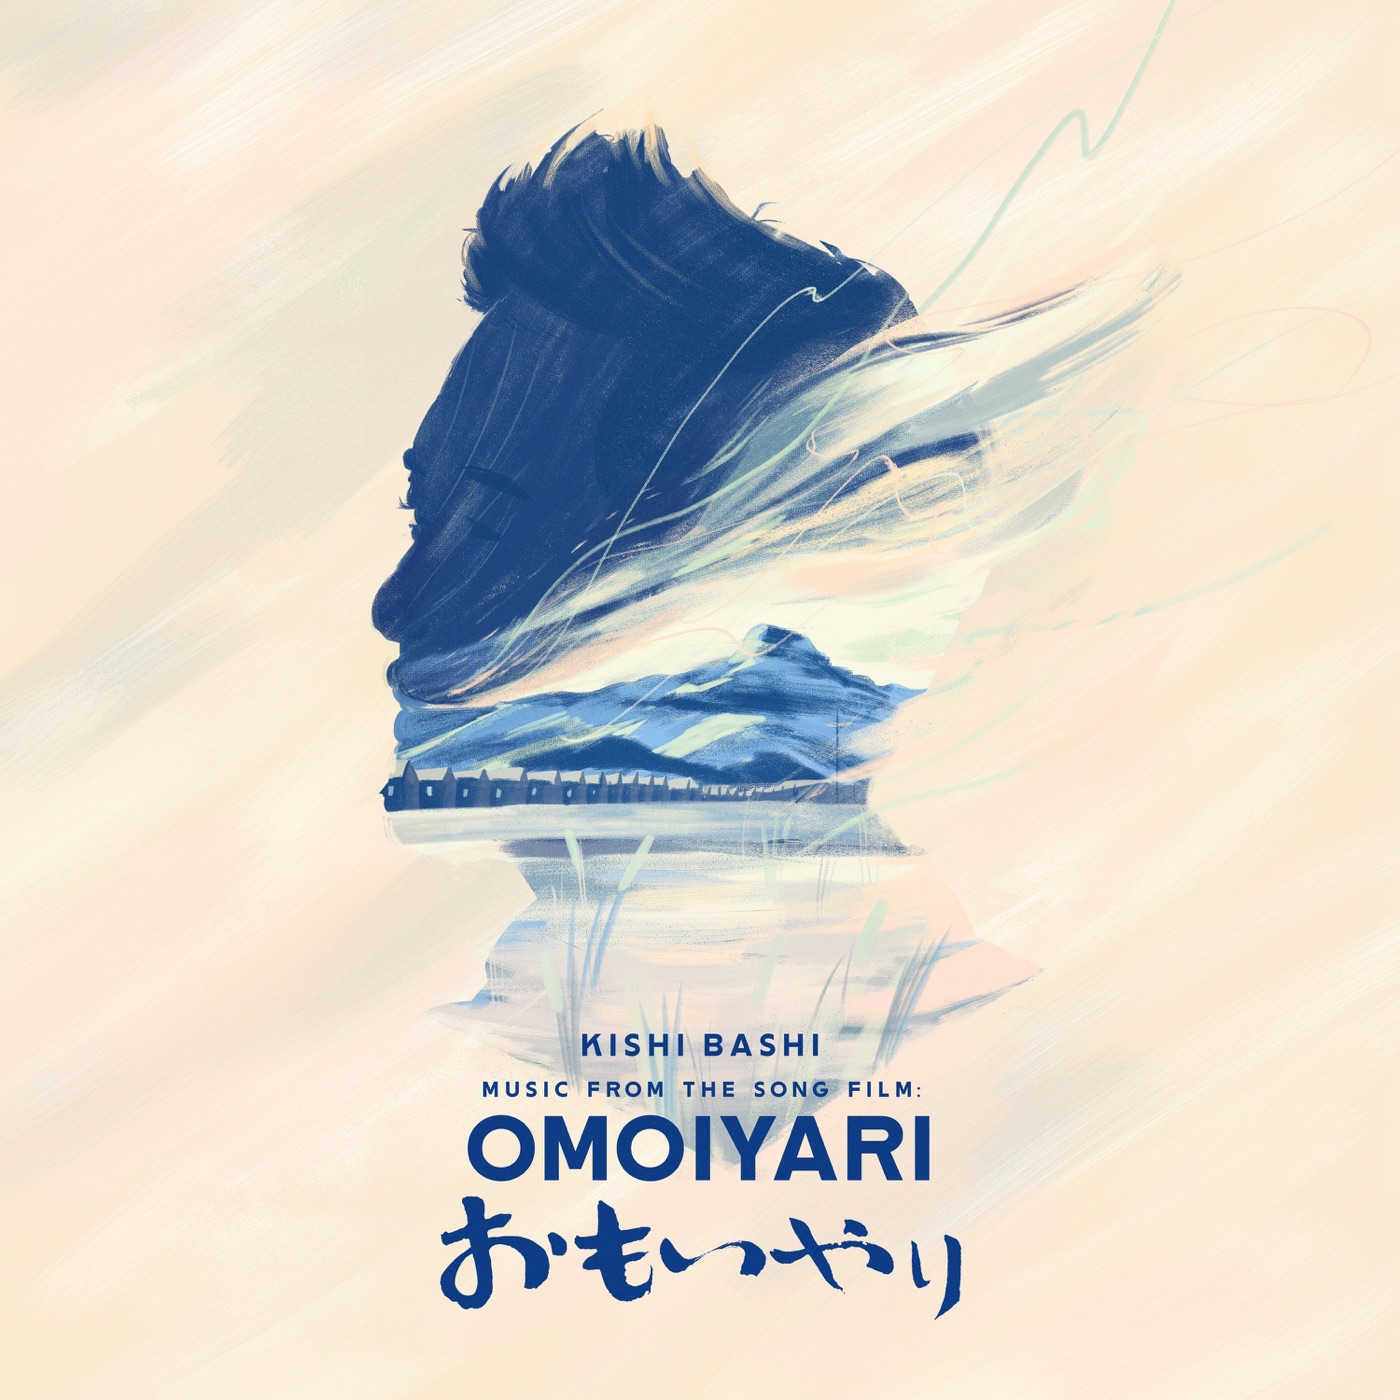 Music from the Song Film: Omoiyari by Kishi Bashi